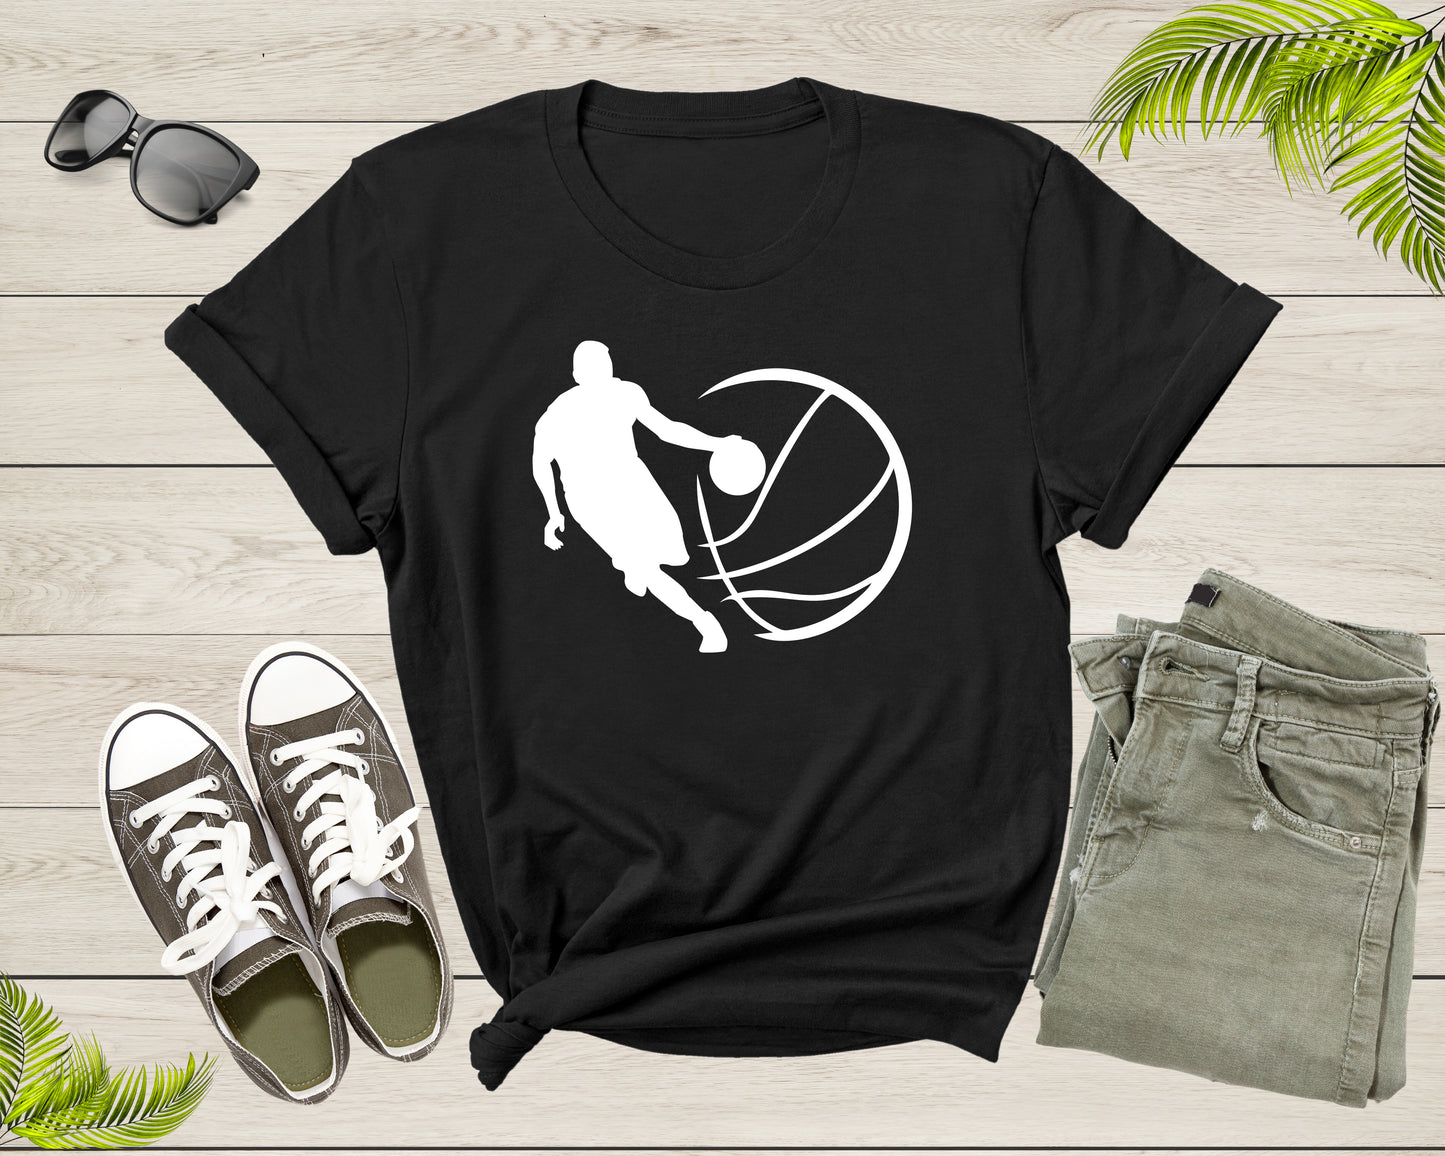 Cool Basketball Player Shirt For Men Women Boys Girls Basketball Lover Gift Idea Tshirt Basketball Birthday Present Gift Dad Mom T-shirt